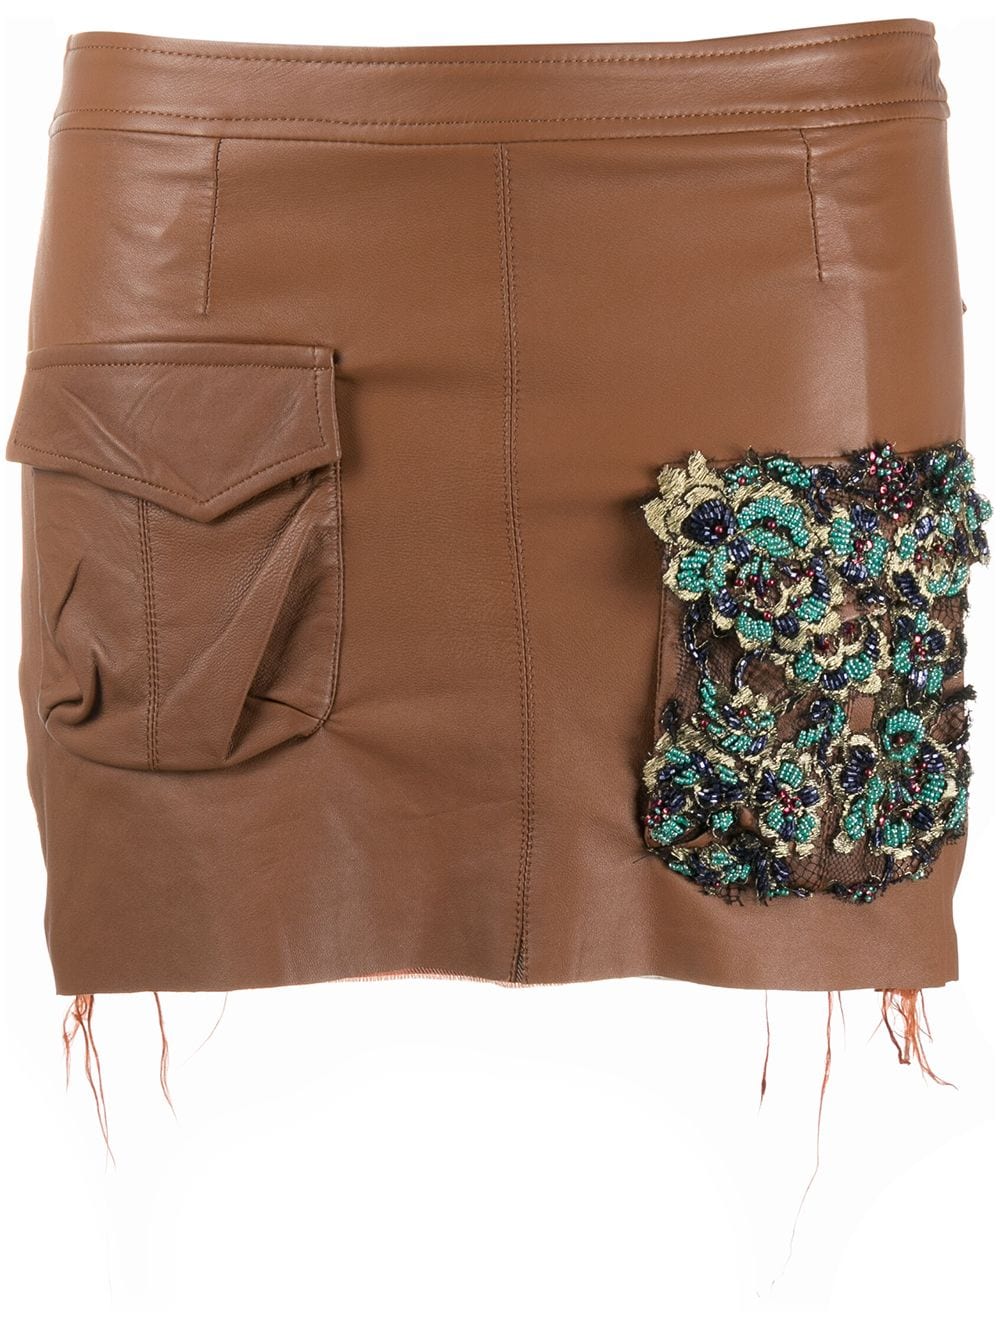 фото Almaz юбка мини с вышивкой бисером на кармане